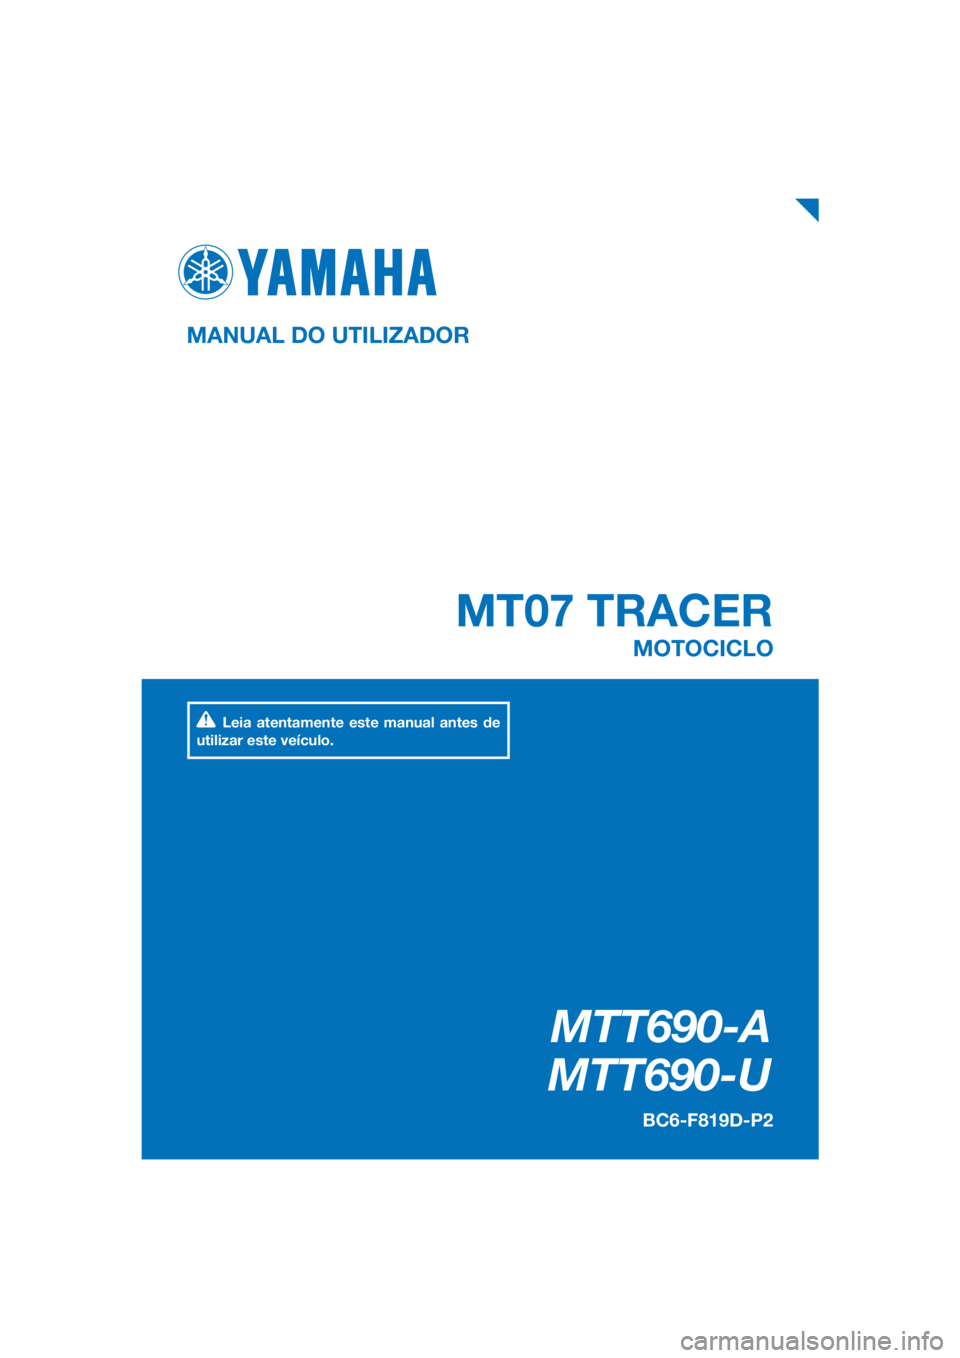 YAMAHA MT07 TRACER 2018  Manual de utilização (in Portuguese) PANTONE285C
MTT690-A
MTT690-U
MT07 TRACER
MANUAL DO UTILIZADOR
BC6-F819D-P2
MOTOCICLO
Leia atentamente este manual antes de 
utilizar este veículo.
[Portuguese  (P)] 